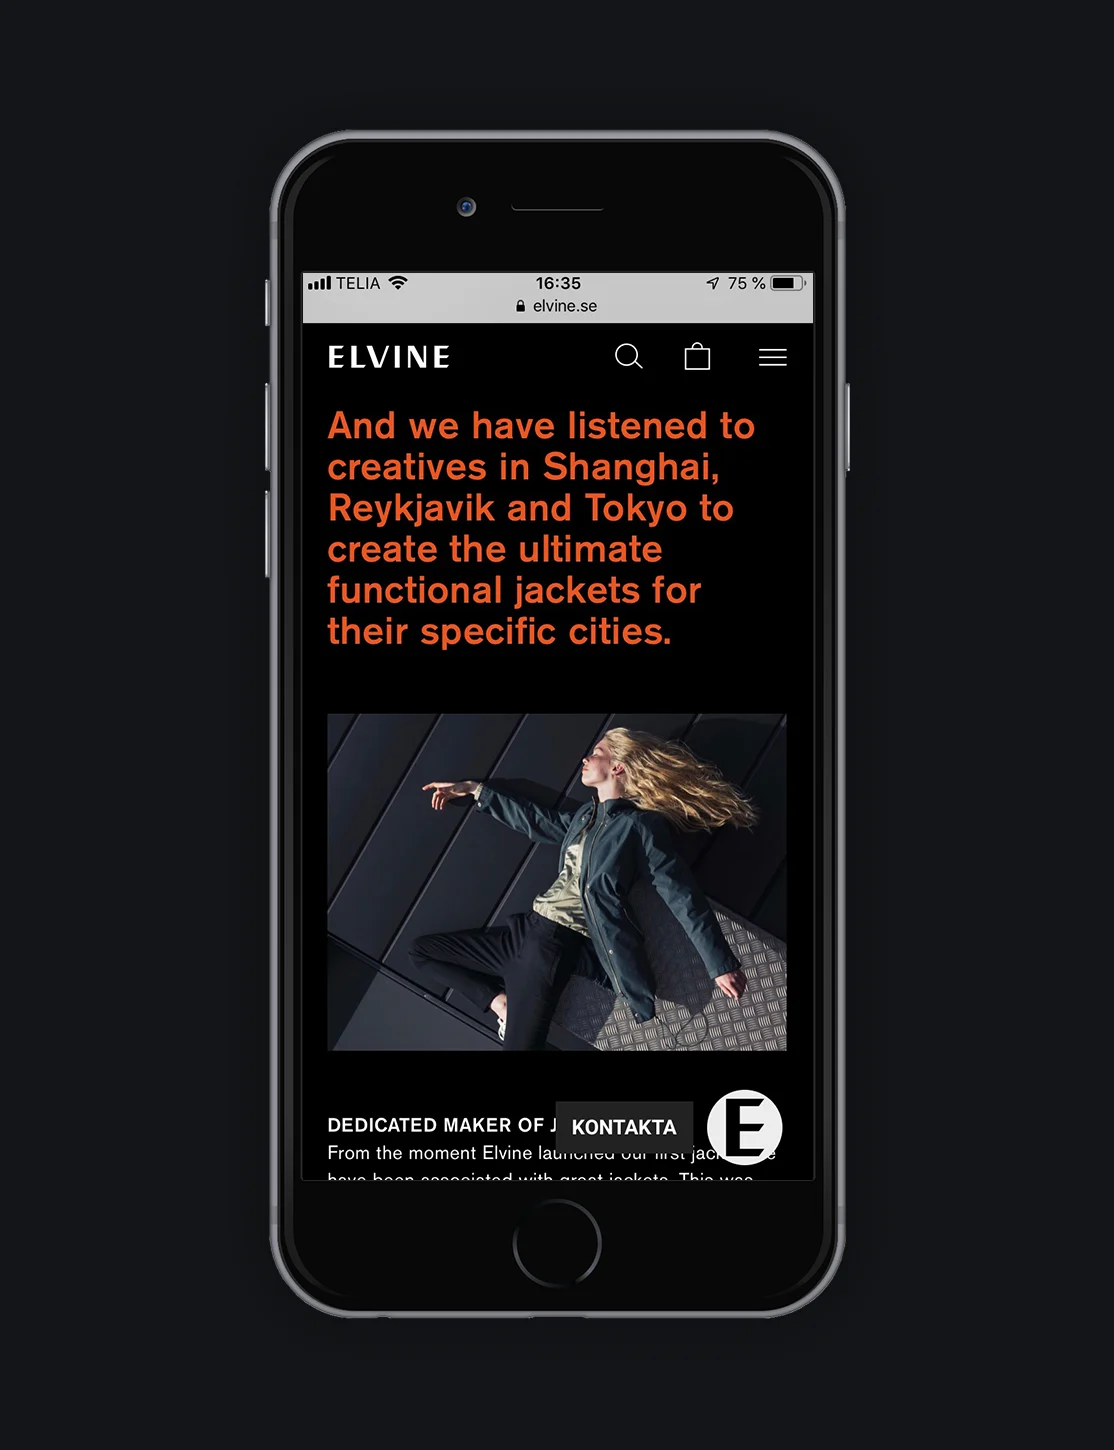 Elvine - Idea image